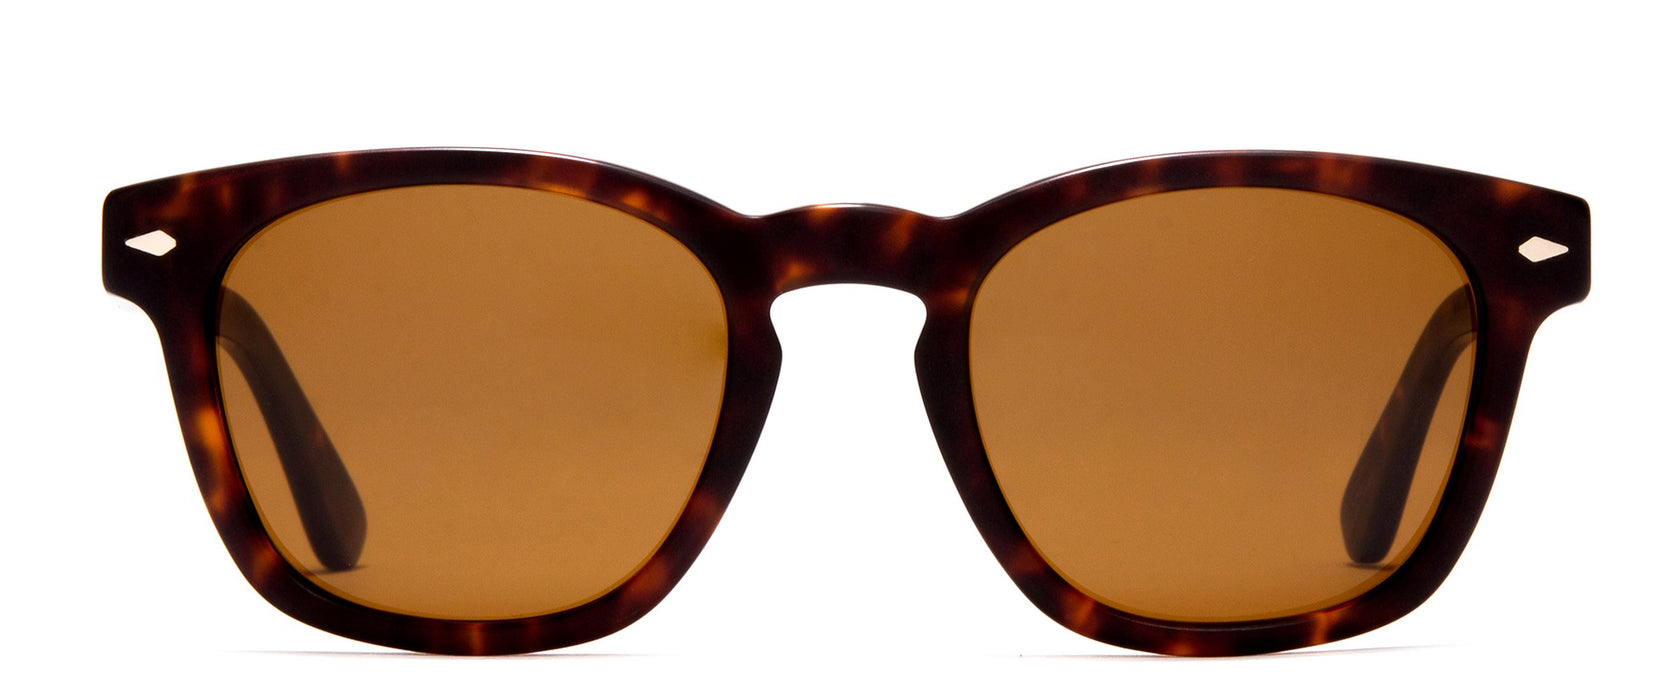 Otis Summer Of 67 Sunglasses-Eco Havana/Brown Polar